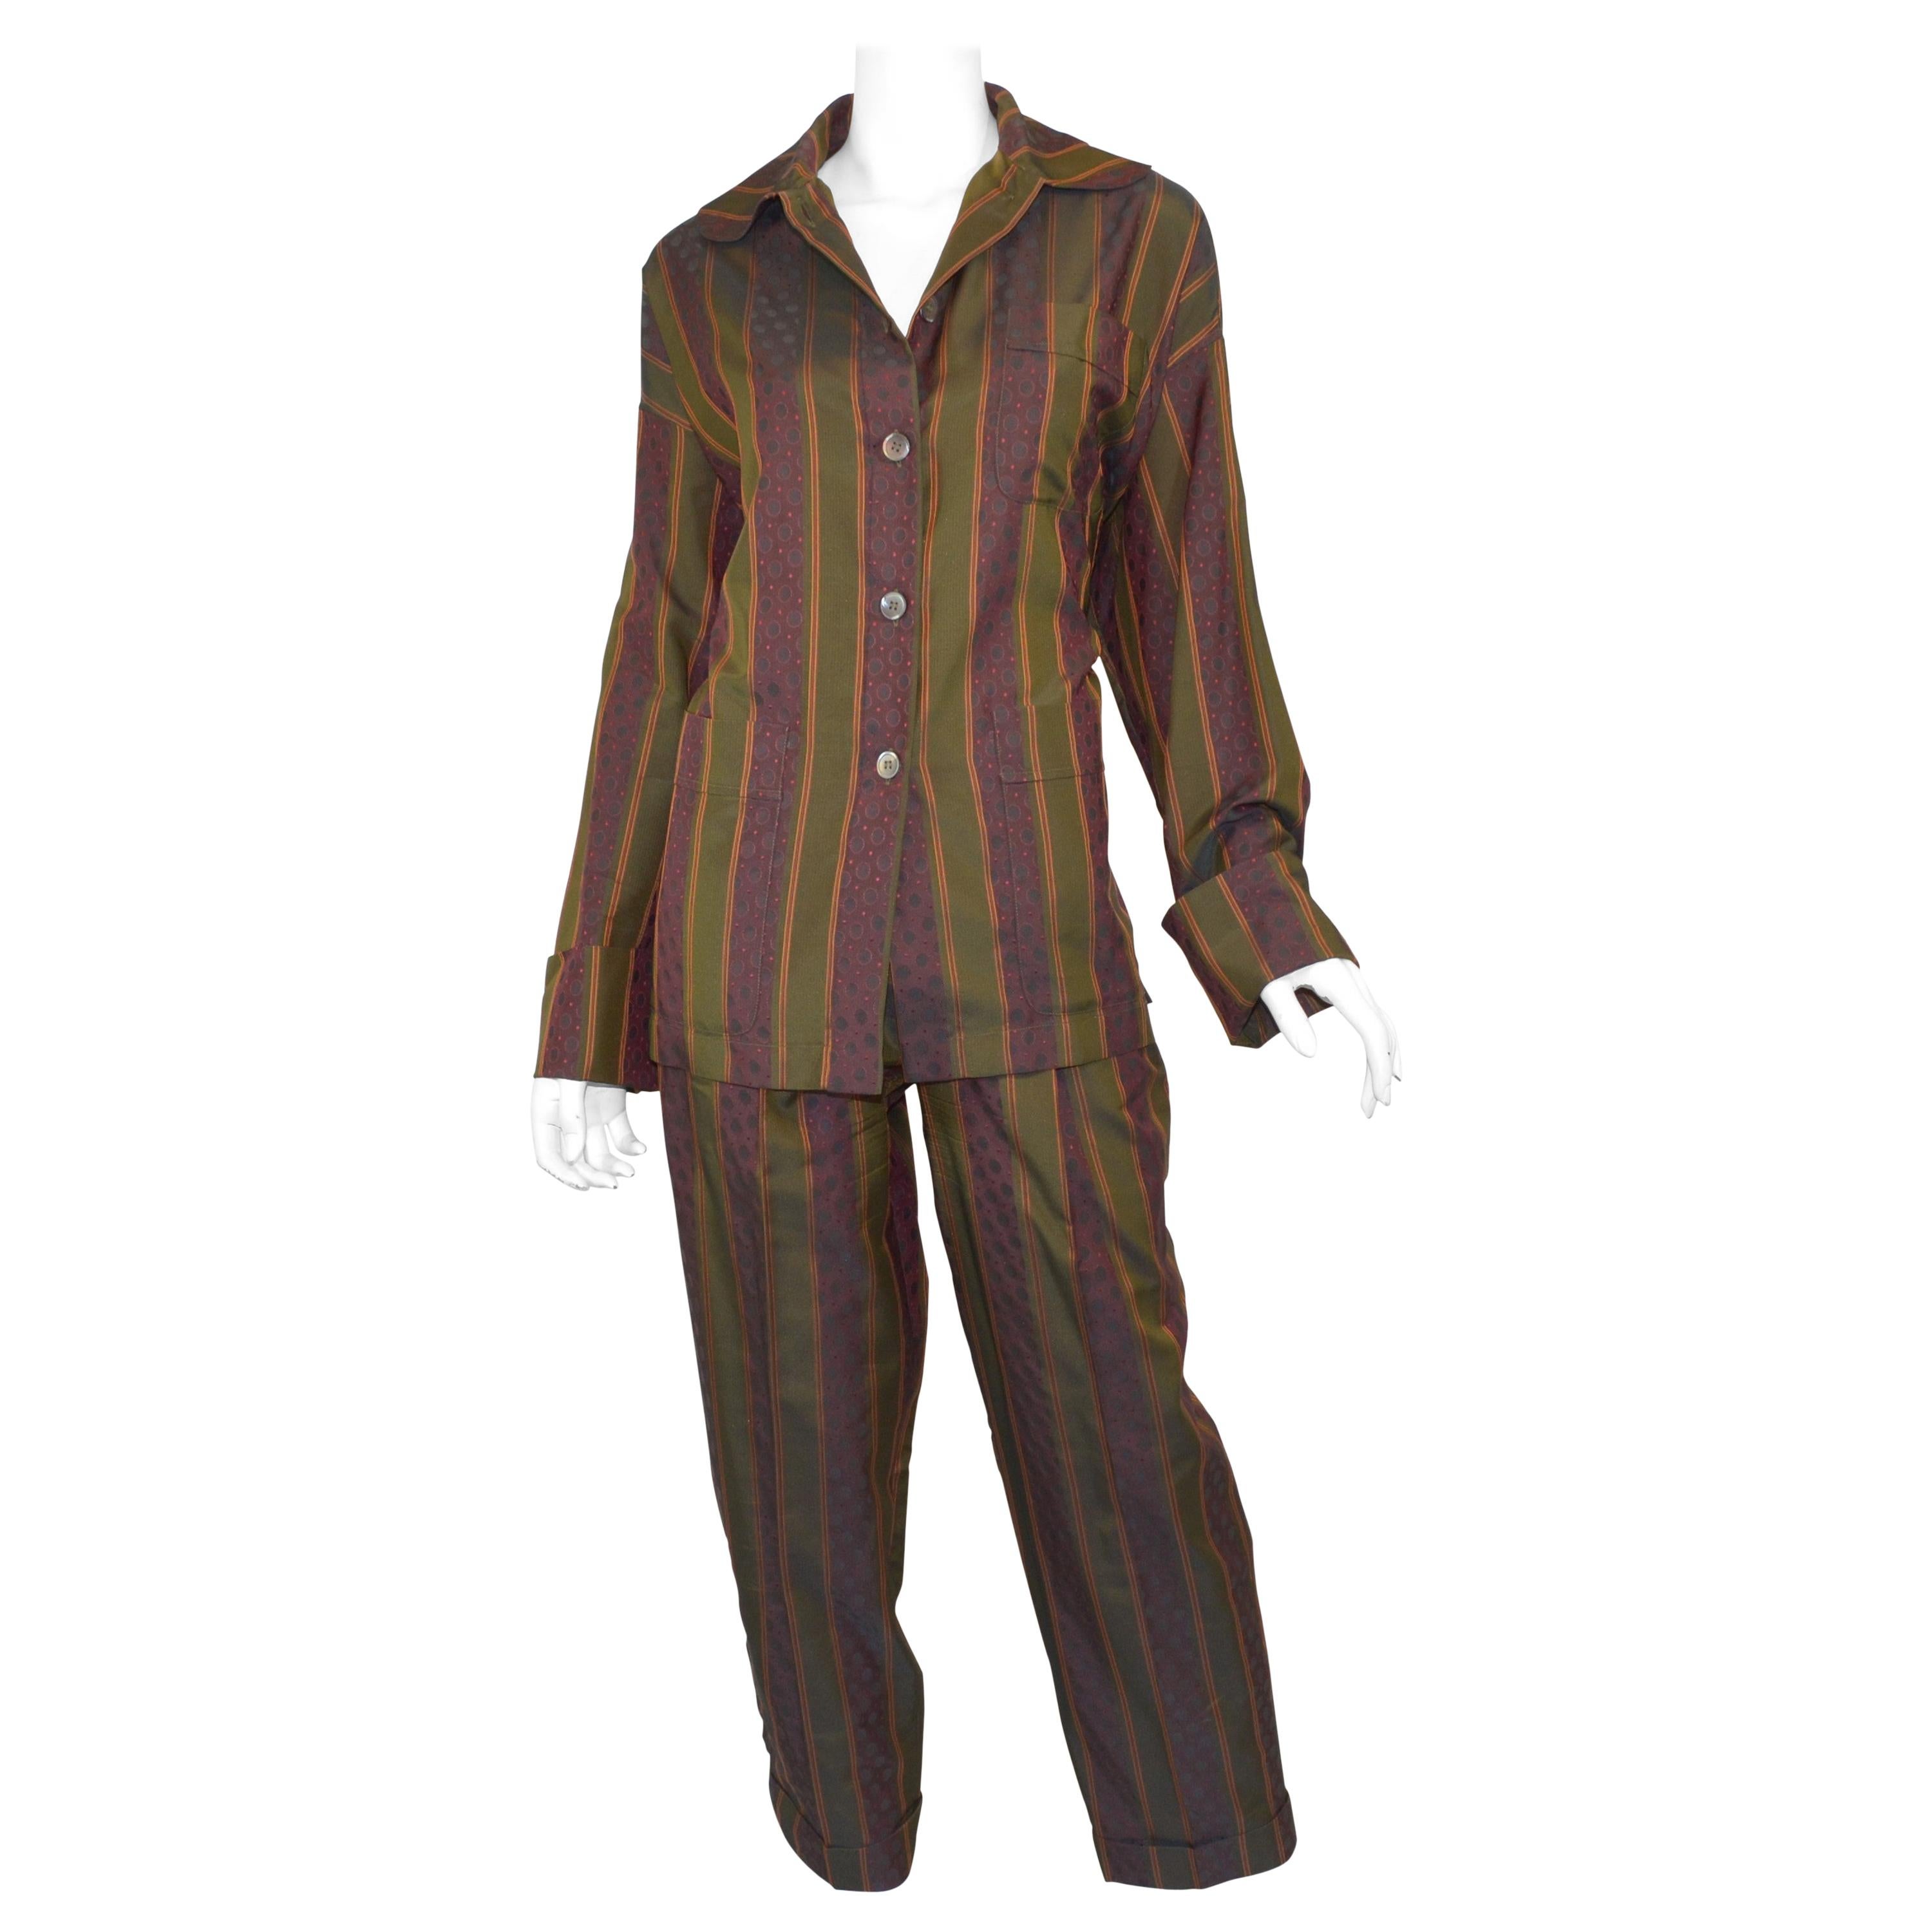 Romeo Gigli Green Sleepwear Pants Suit